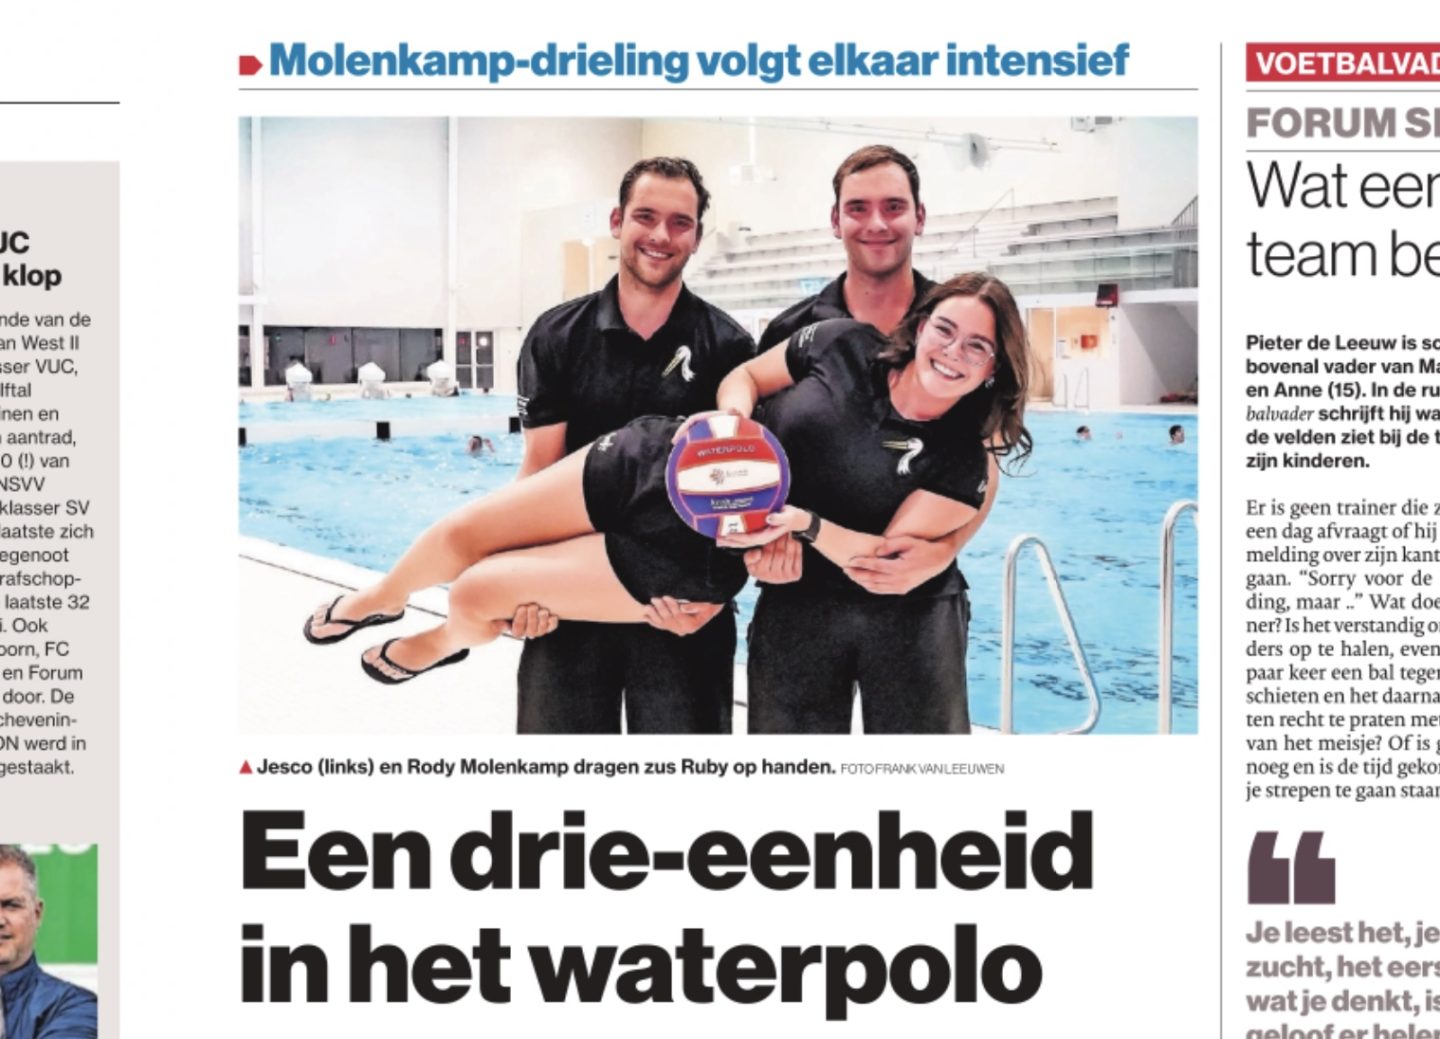 Waterpolo in algemeen dagblad Haagse courant